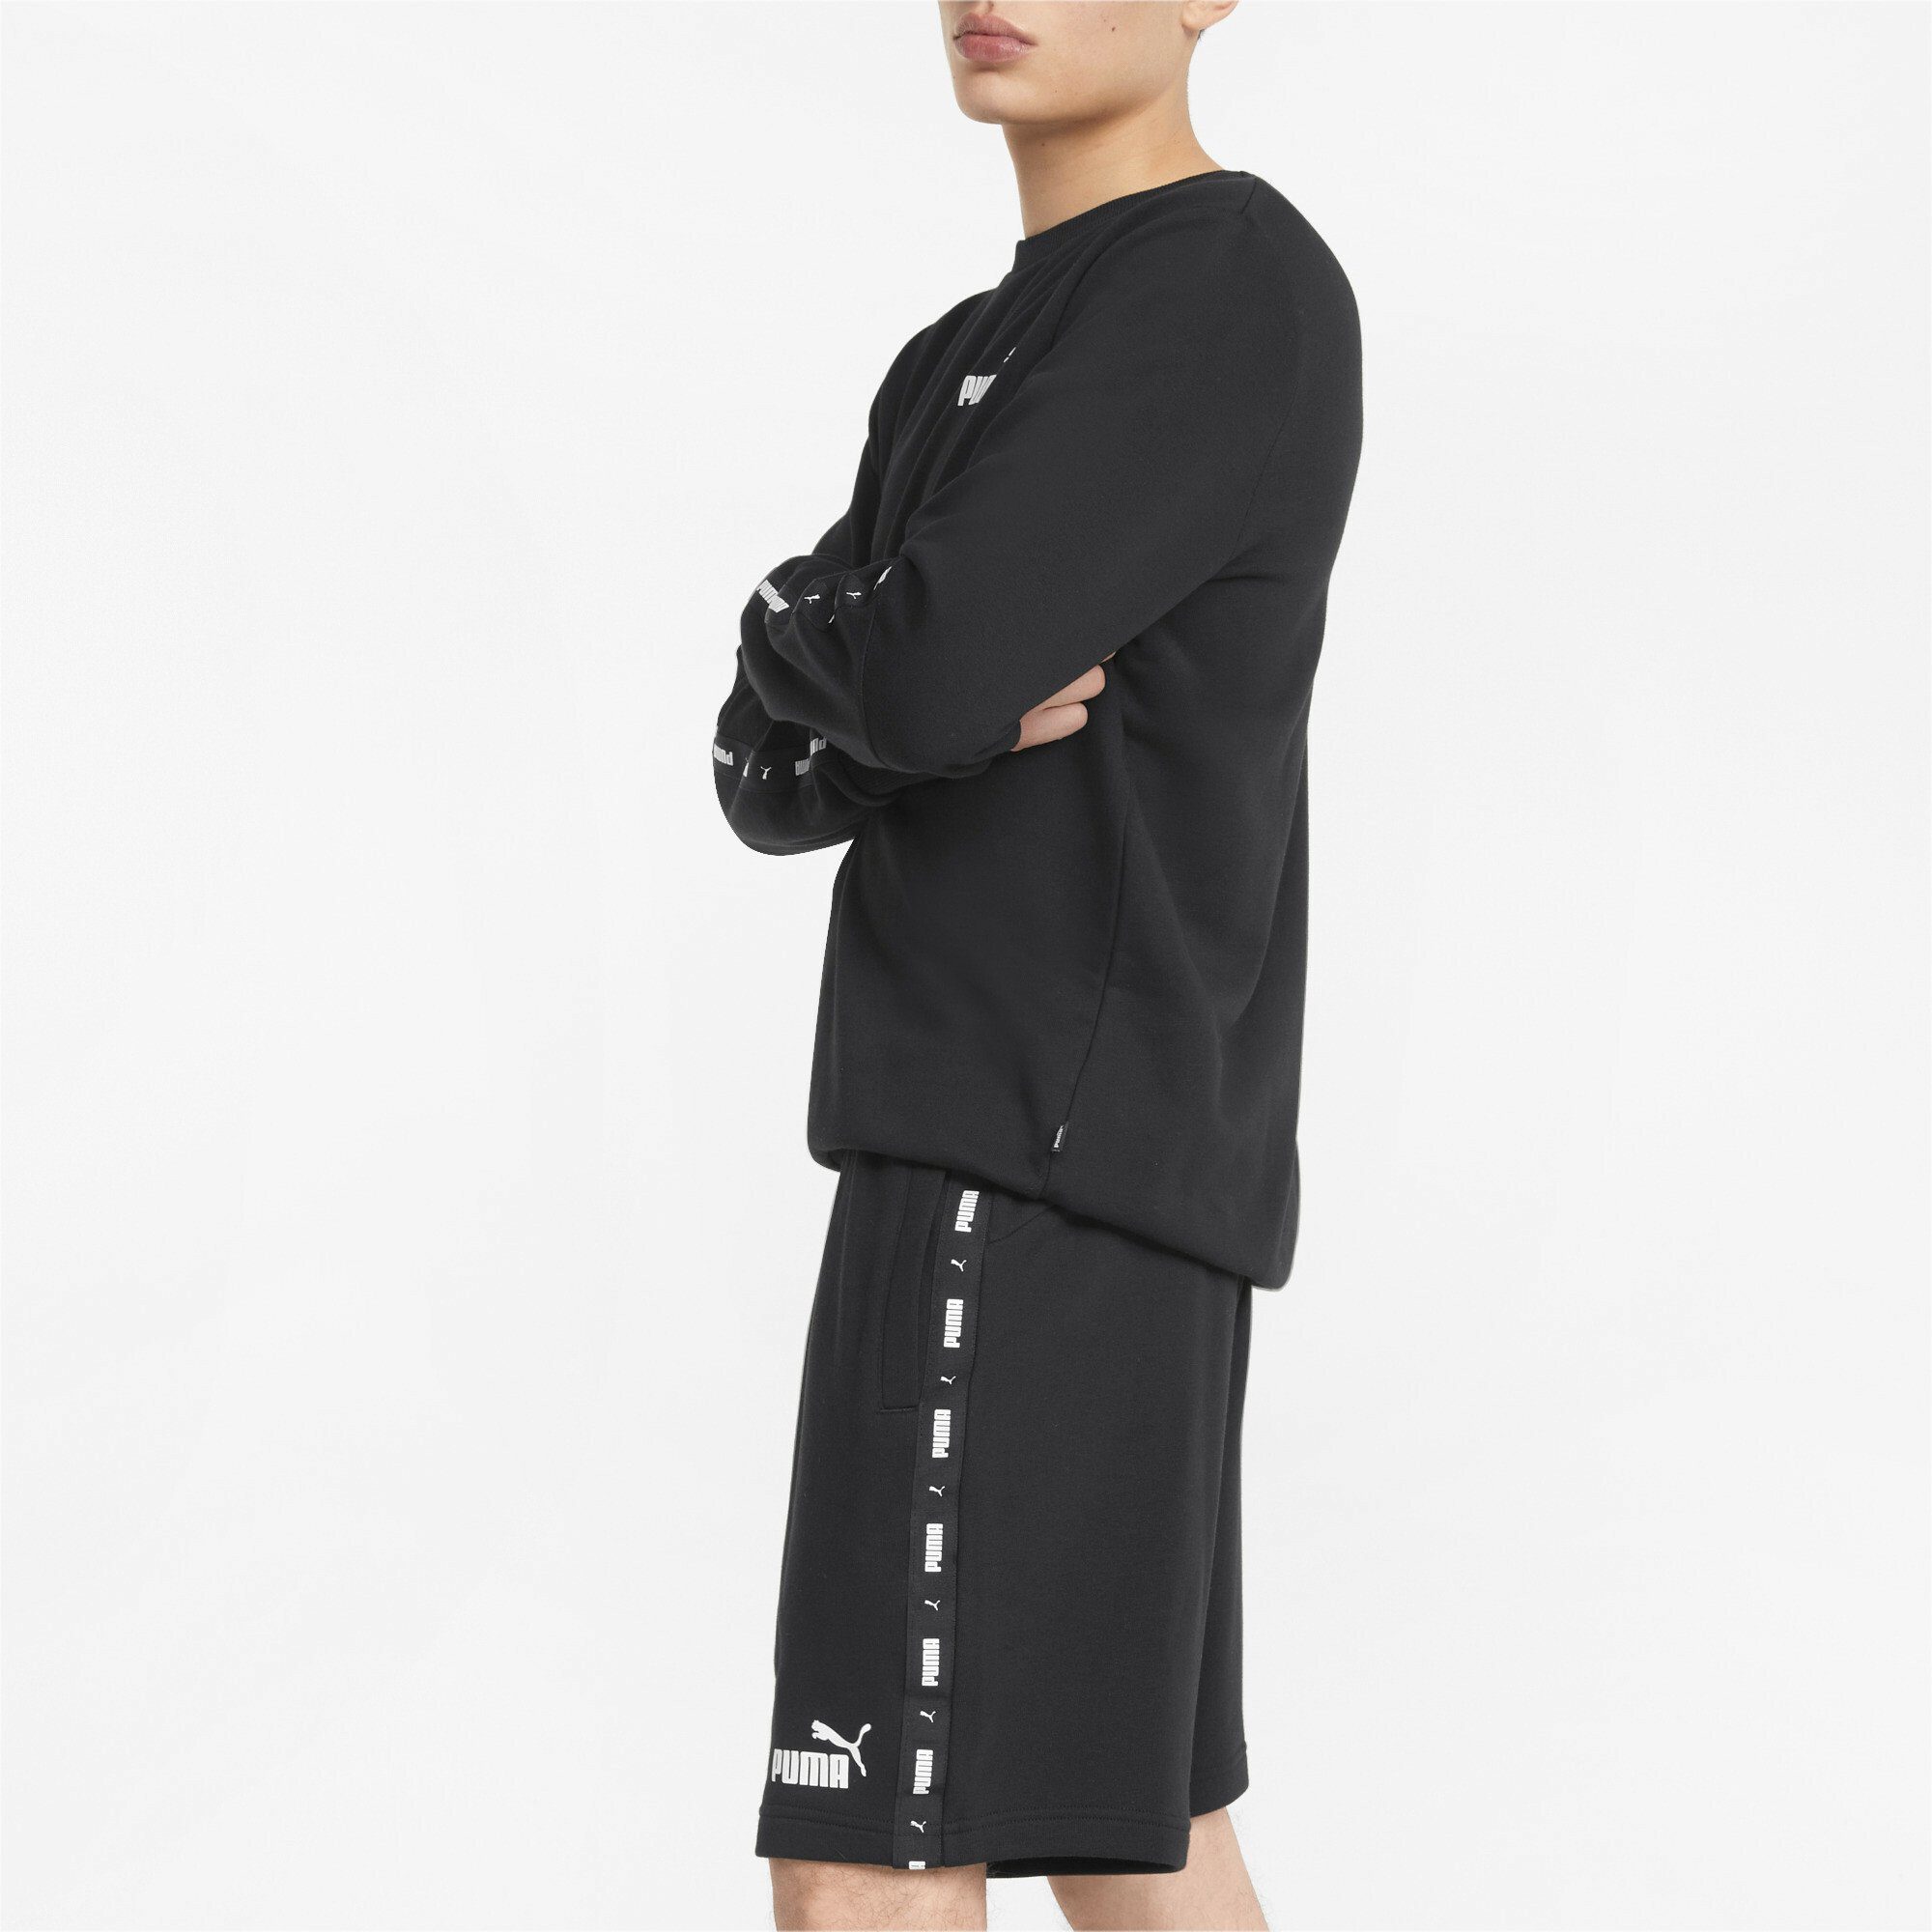 Herren PUMA Essentials+ Black Shorts Sporthose